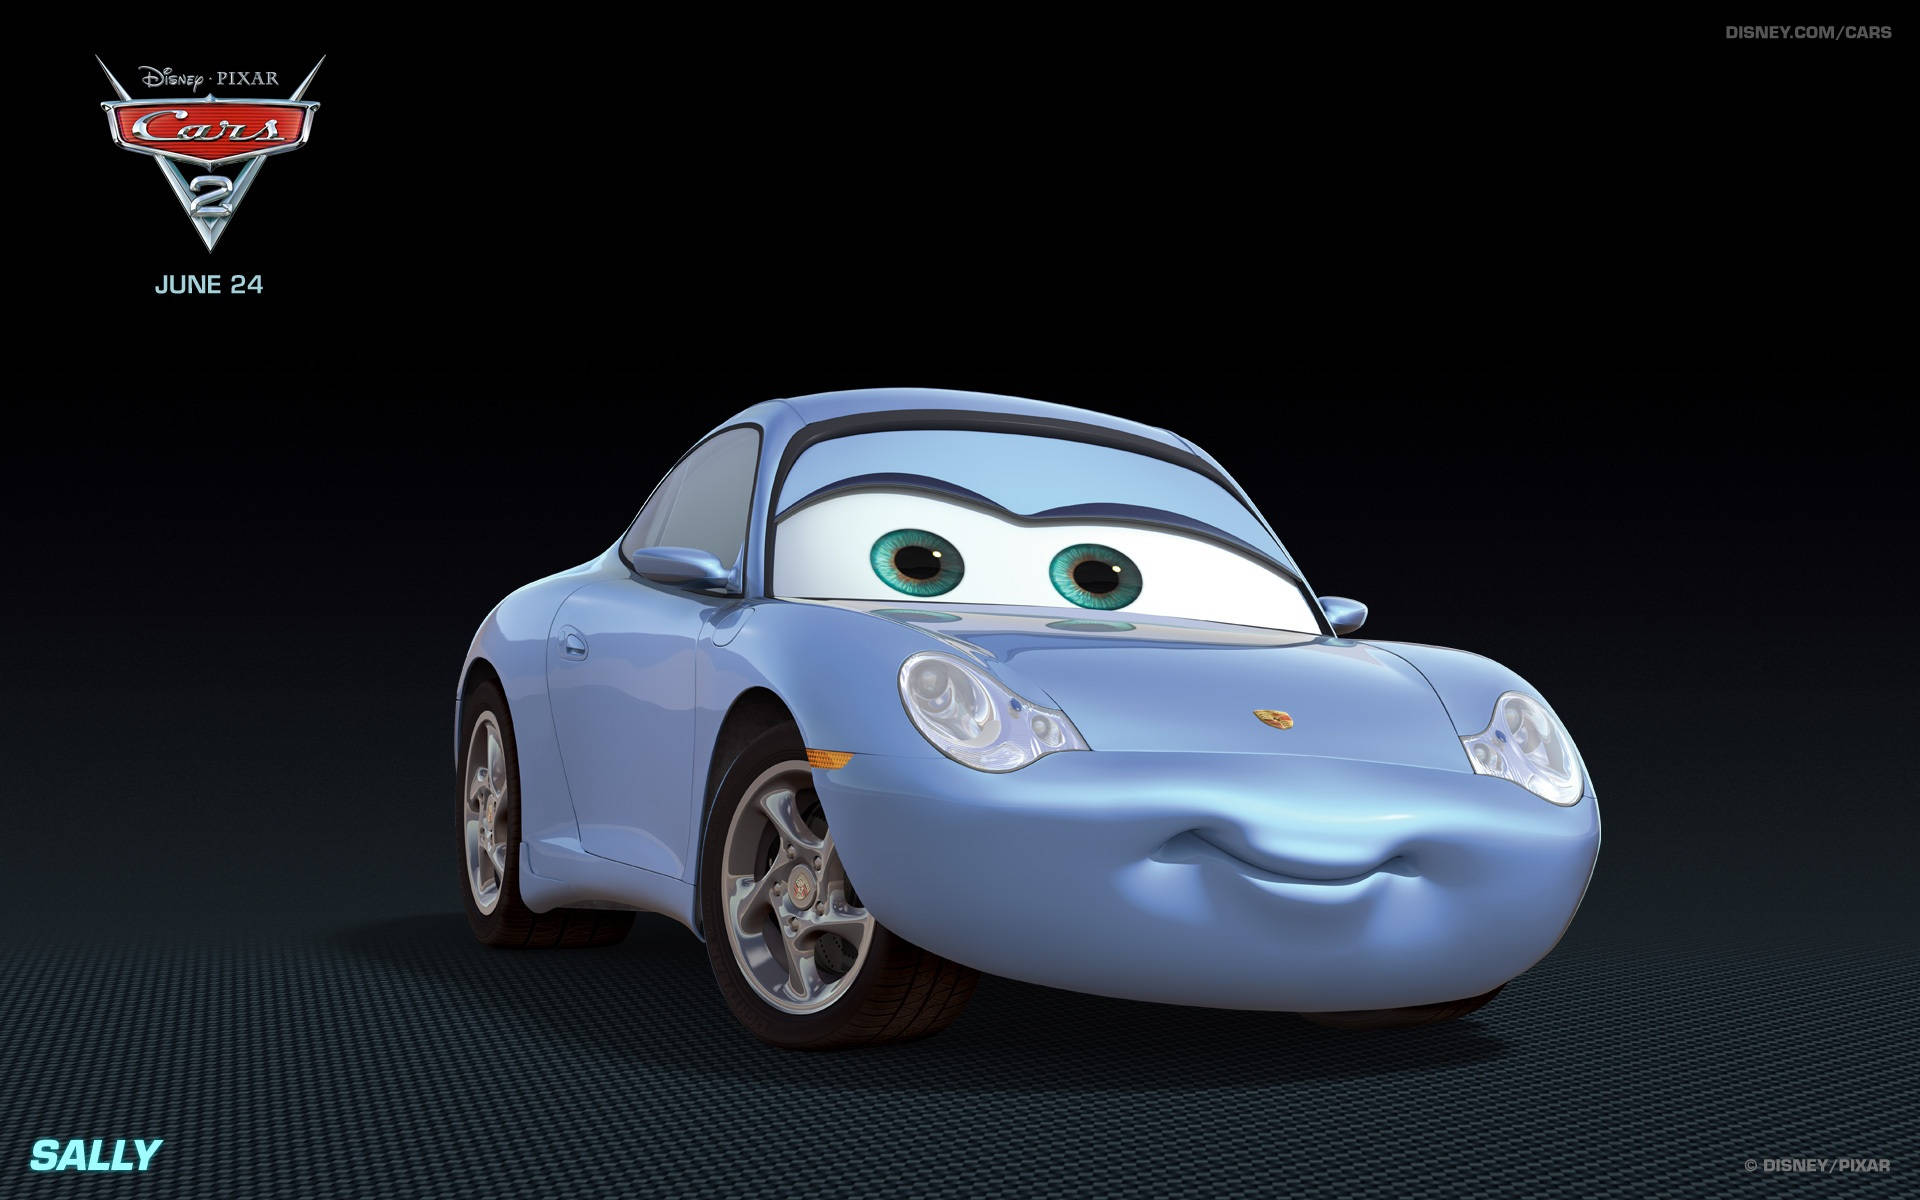 Disney Pixar Sally Carrera Cars 2 Wallpaper